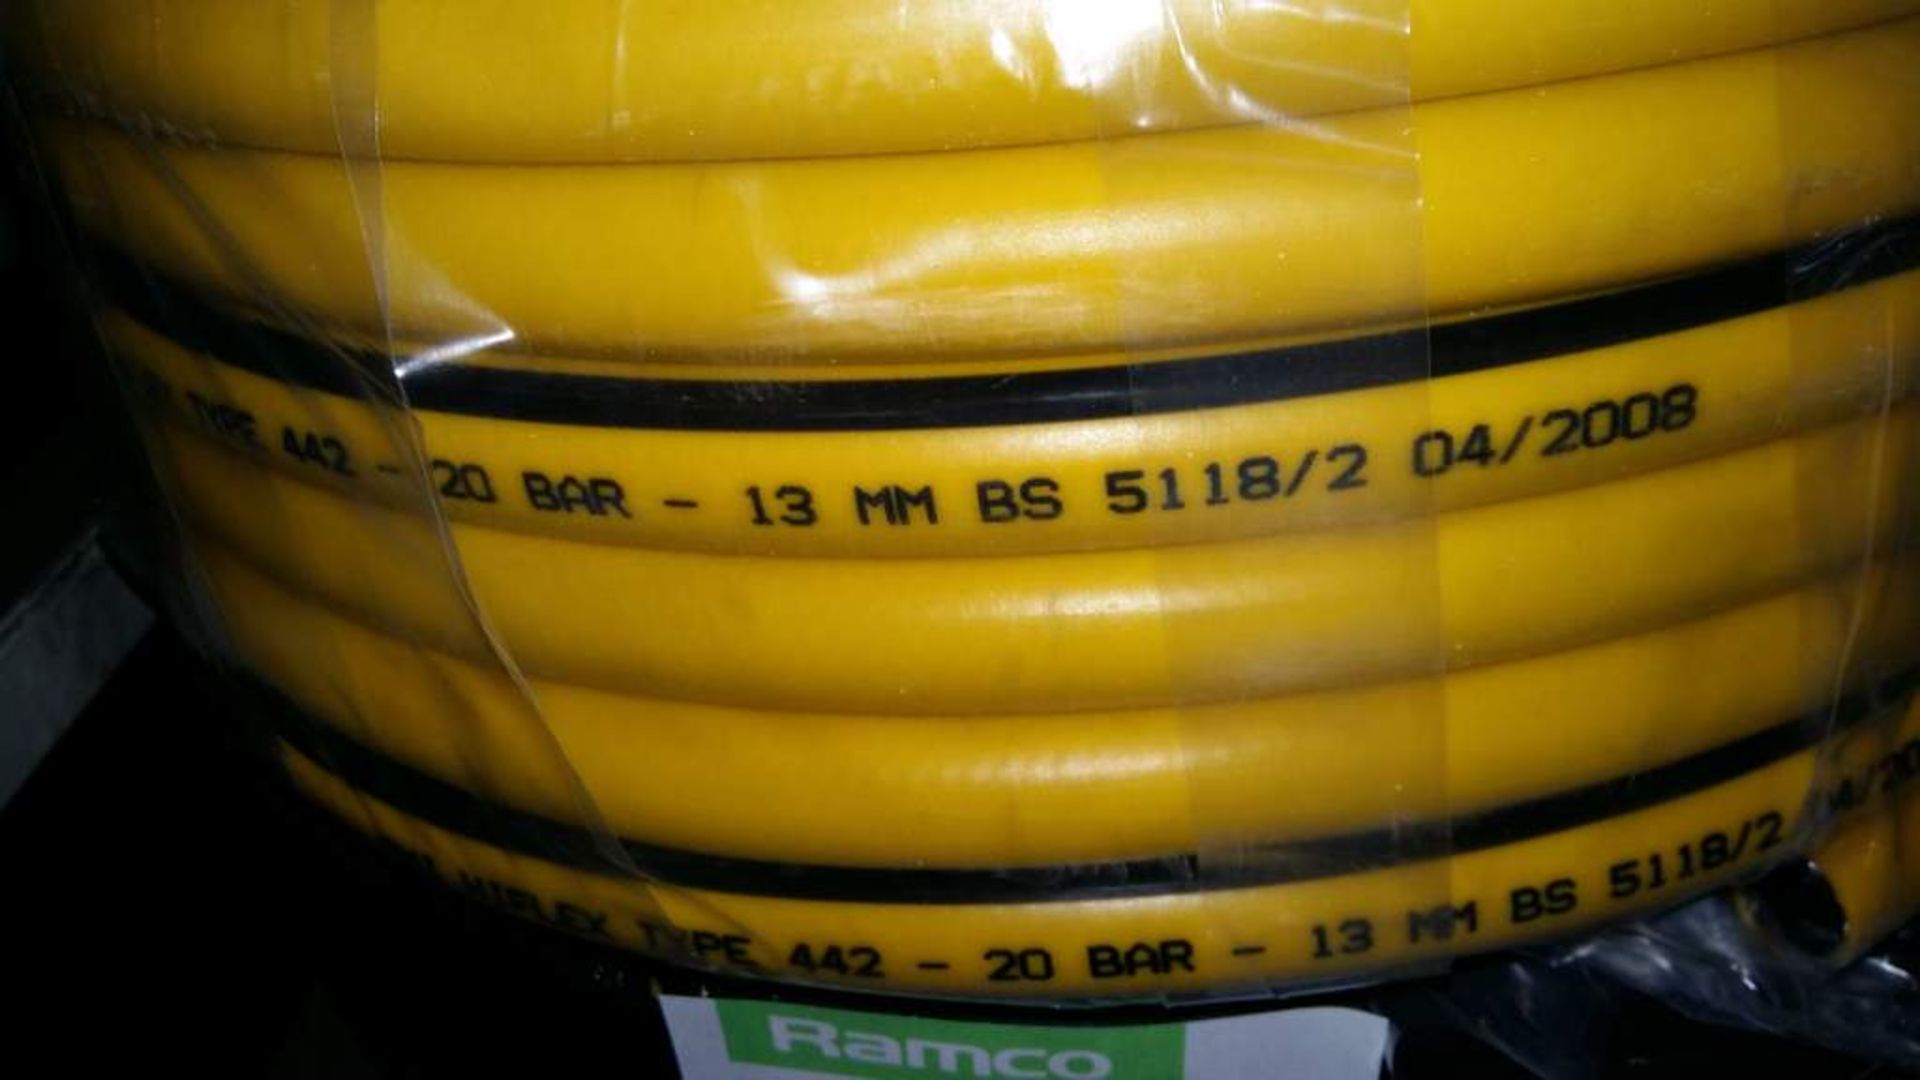 2x 20m Rubber hose 20 BAR - Image 2 of 2